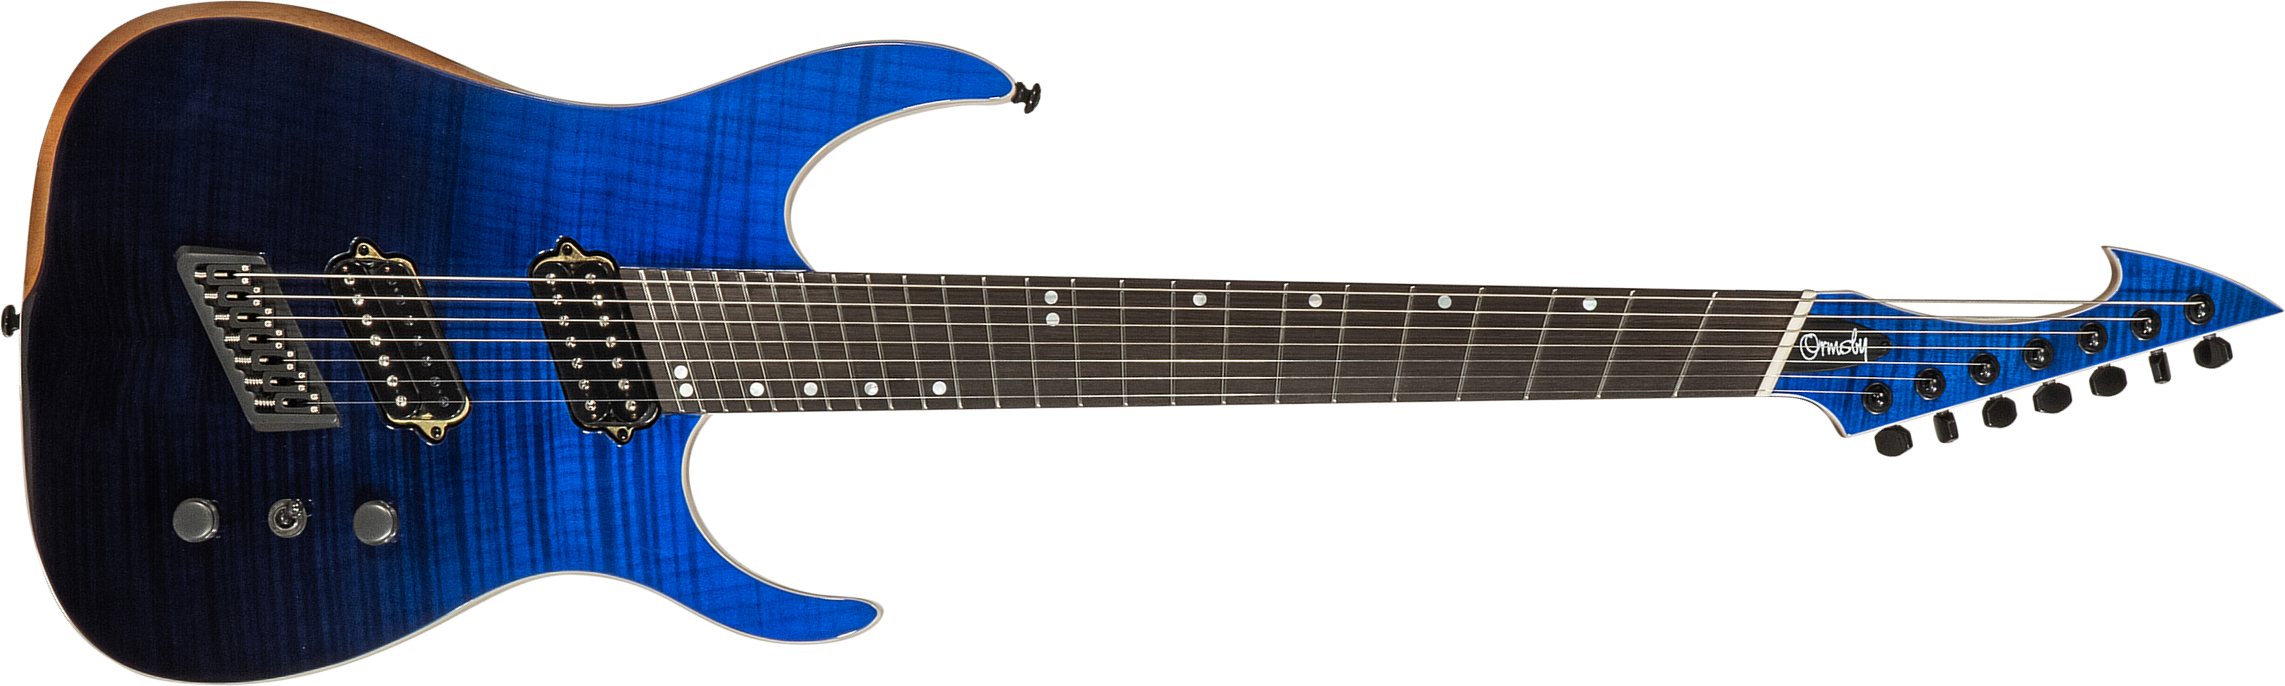 Ormsby Hype Gtr 7 Ltd Run 16 7c Multiscale 2h Ht Eb #gtr07655 - Sky Fall - Multi-scale gitaar - Main picture